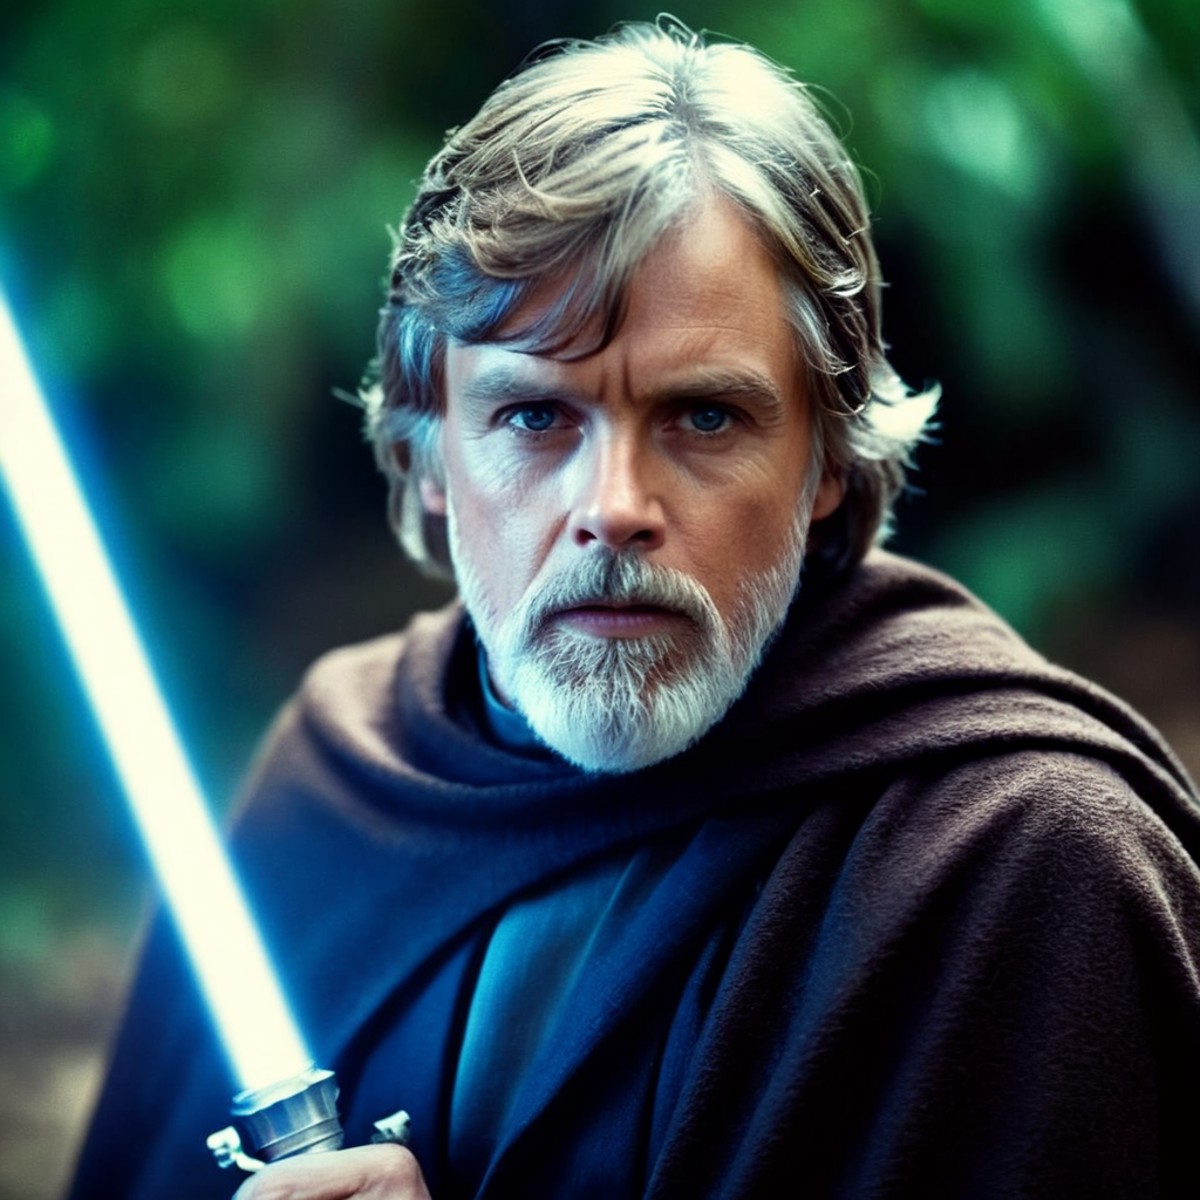 cinematic film still of  <lora:Luke Skywalker:1.2>
Luke Skywalker a man with a grey beard and a light saber in star wars u...